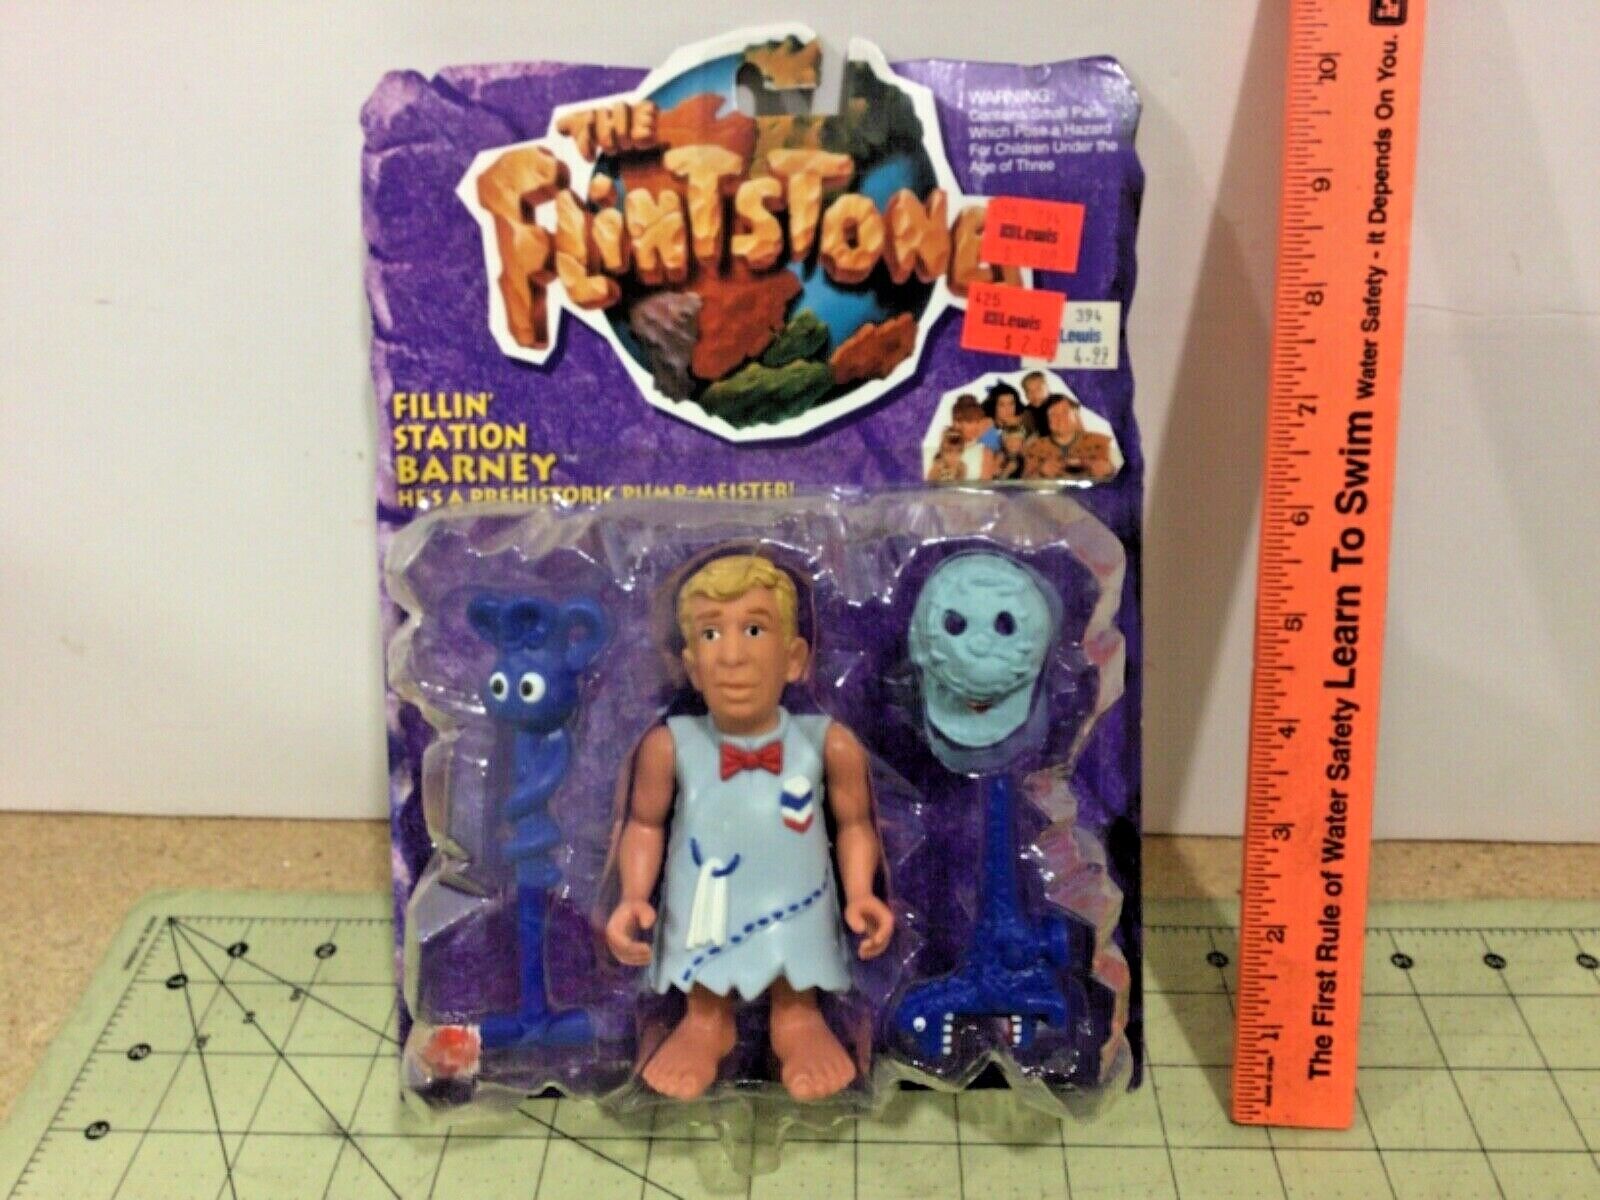 The Flintstones Movie “Fillin’ Station Barney’ figure, 